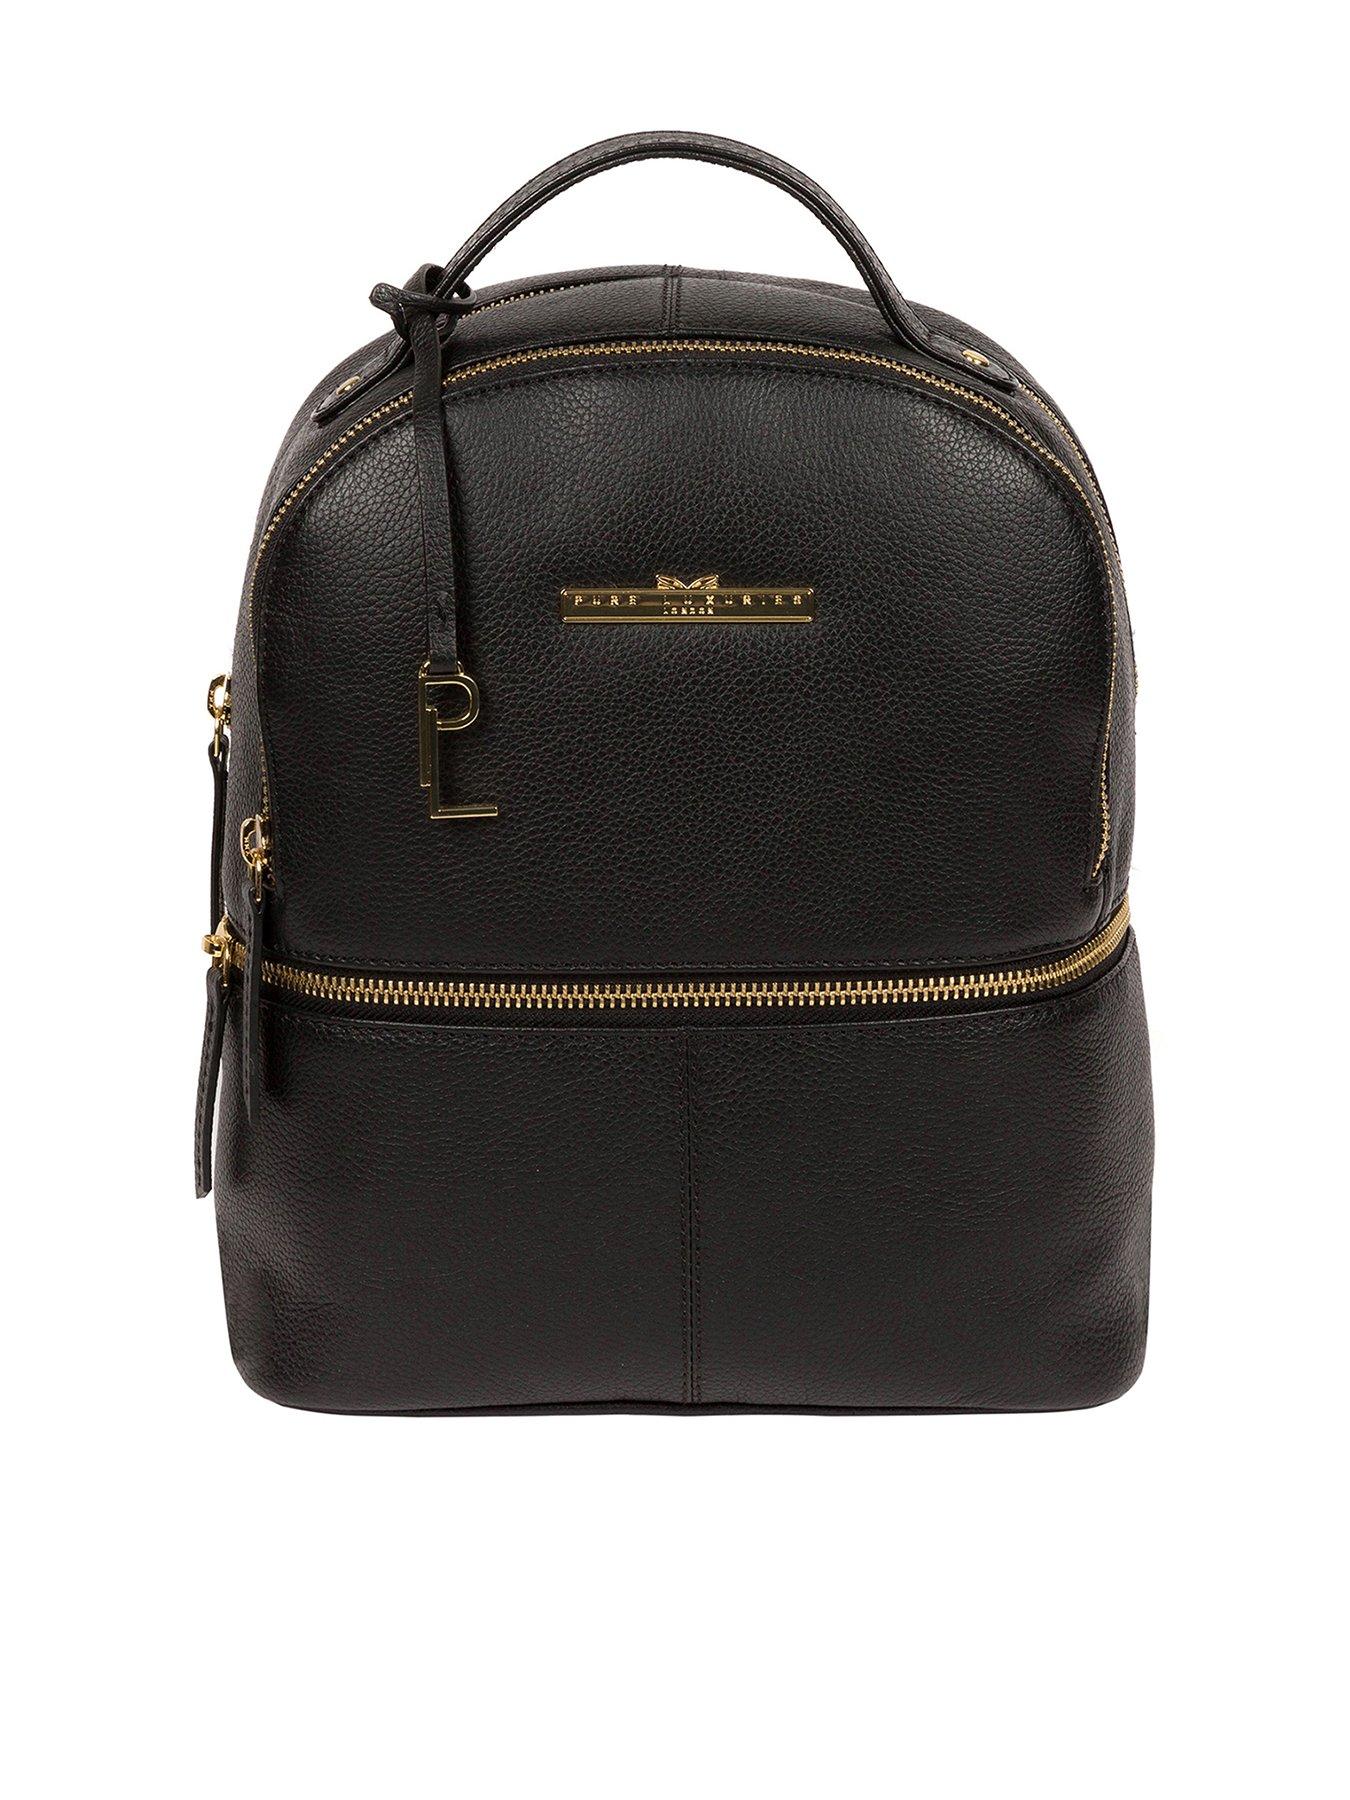 Pure Luxuries London Saddle Tan 'Hatton' Leather Tote Bag - Handbags